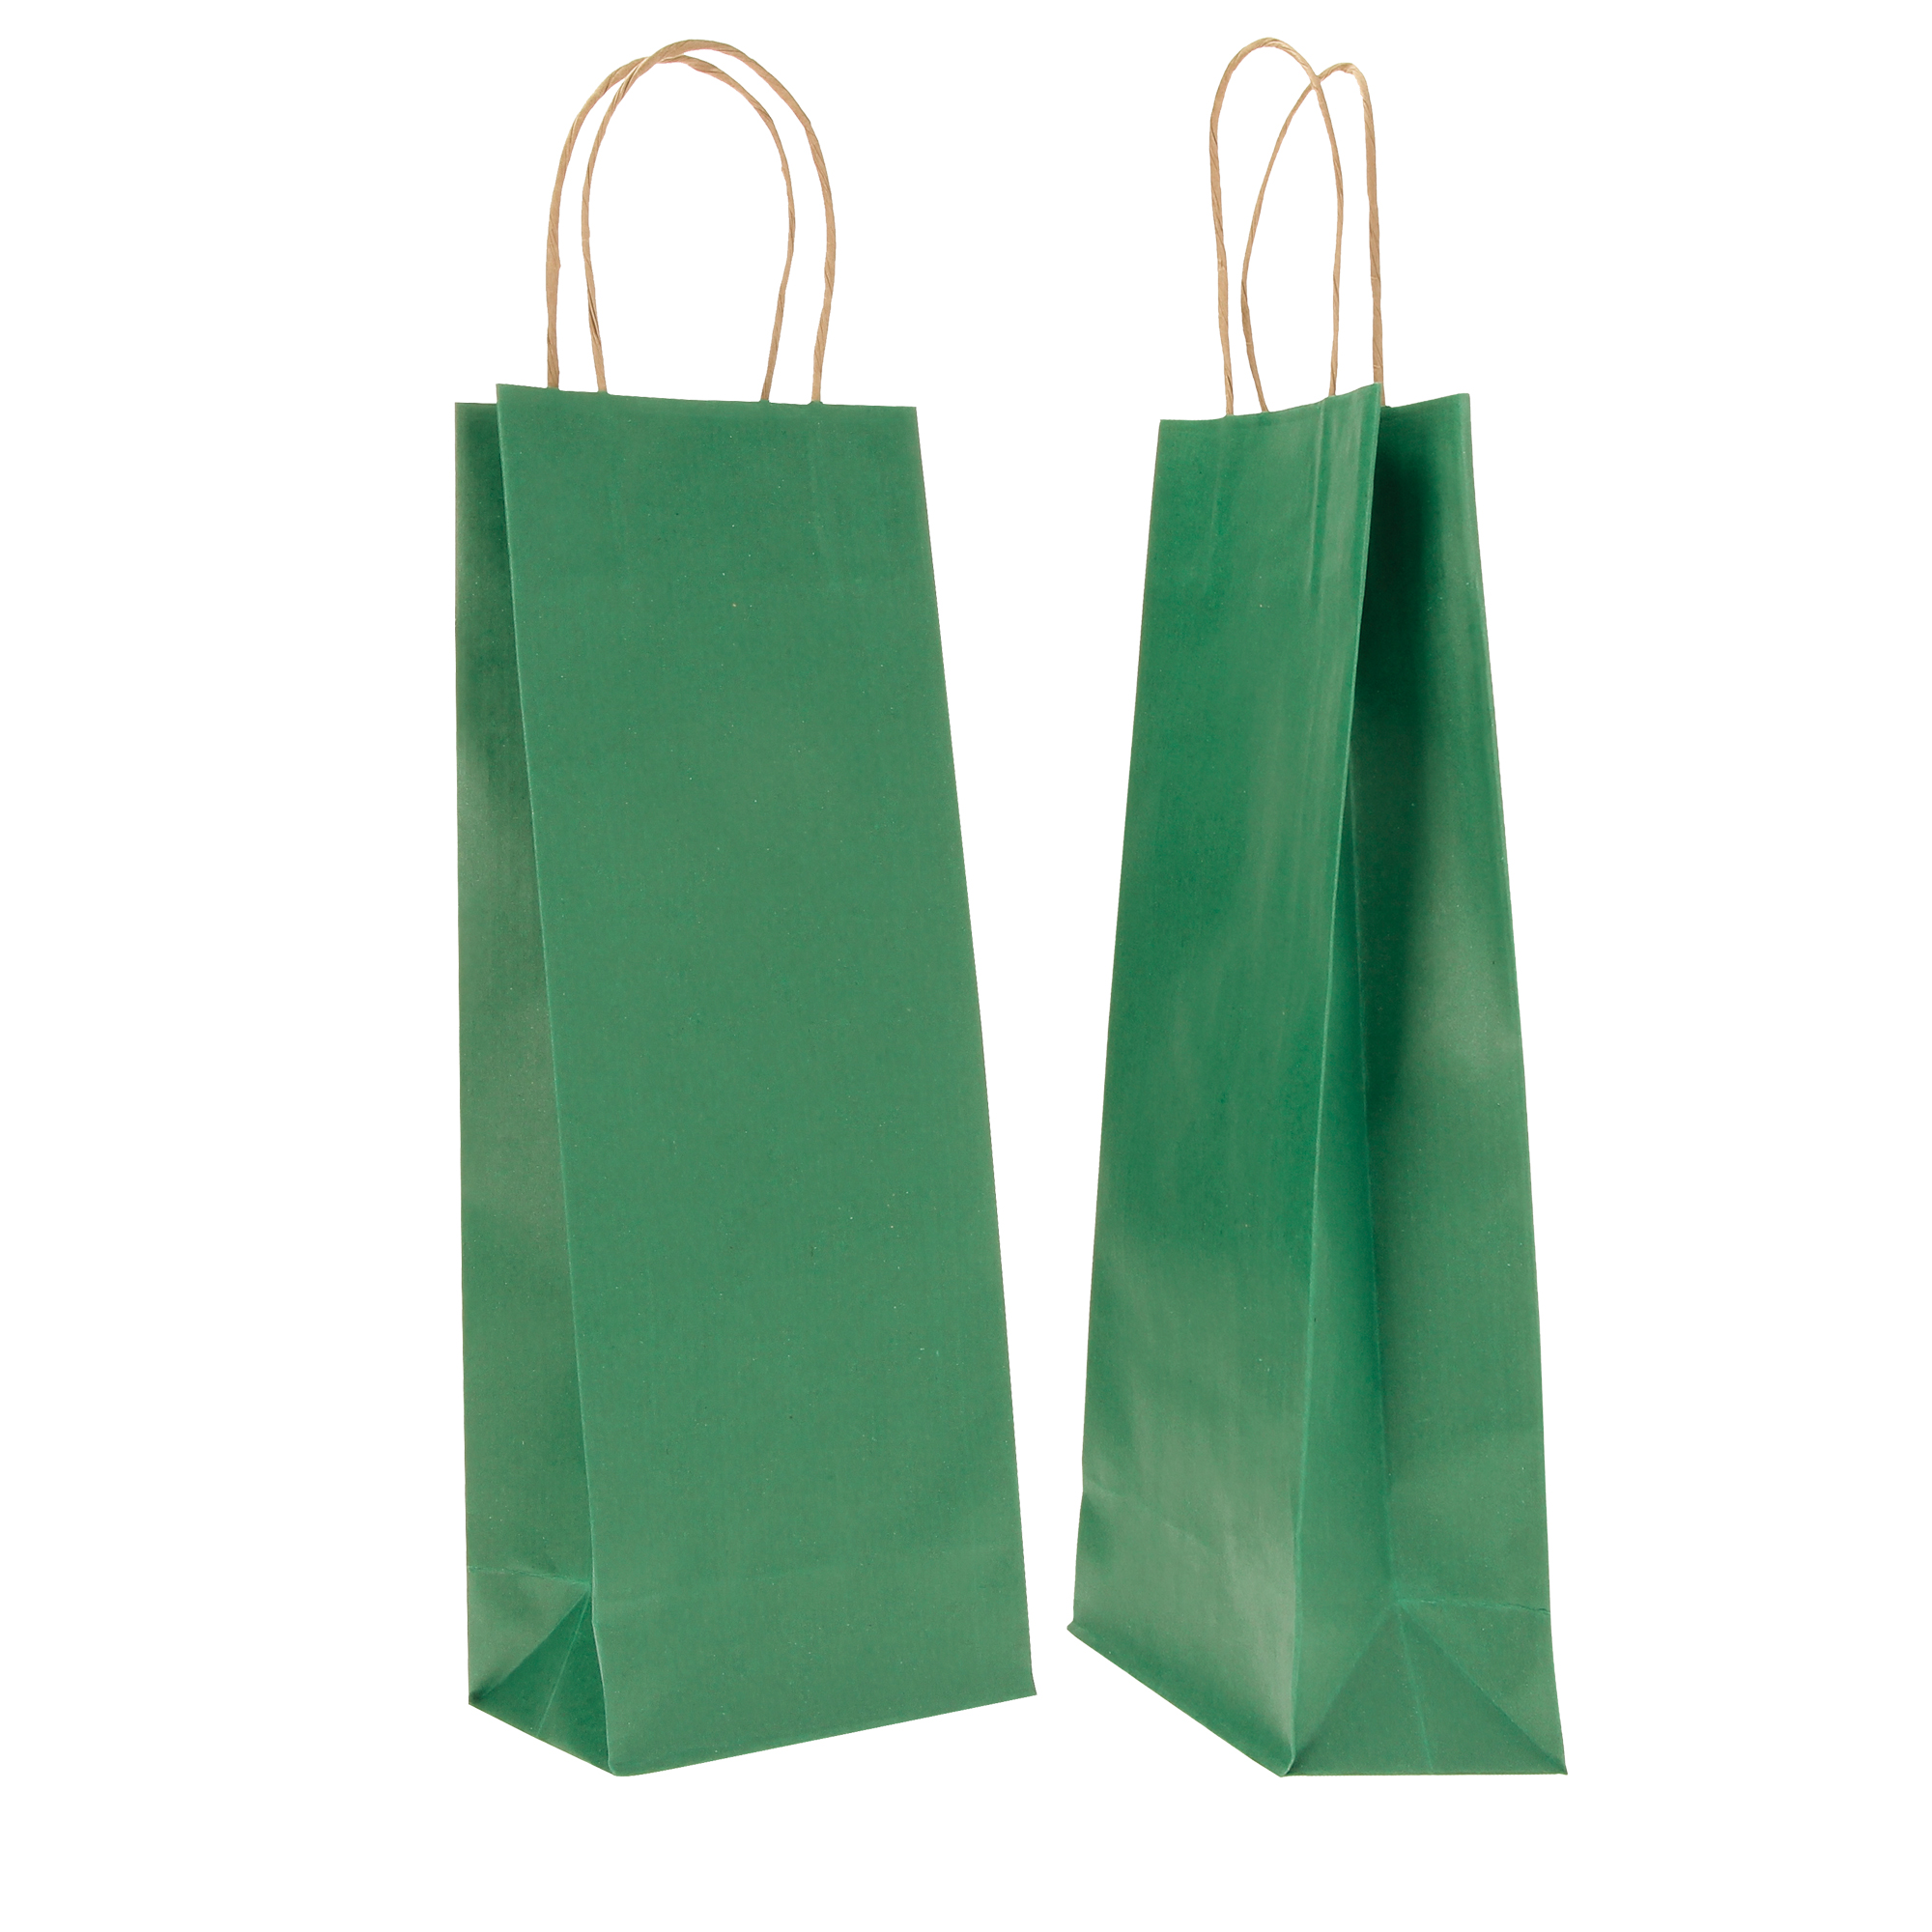 Portabottiglie BARBERA - maniglie cordino - 14 x 9 x 38 cm - carta biokraft  - verde - Mainetti Bags - conf. 20 pezzi su